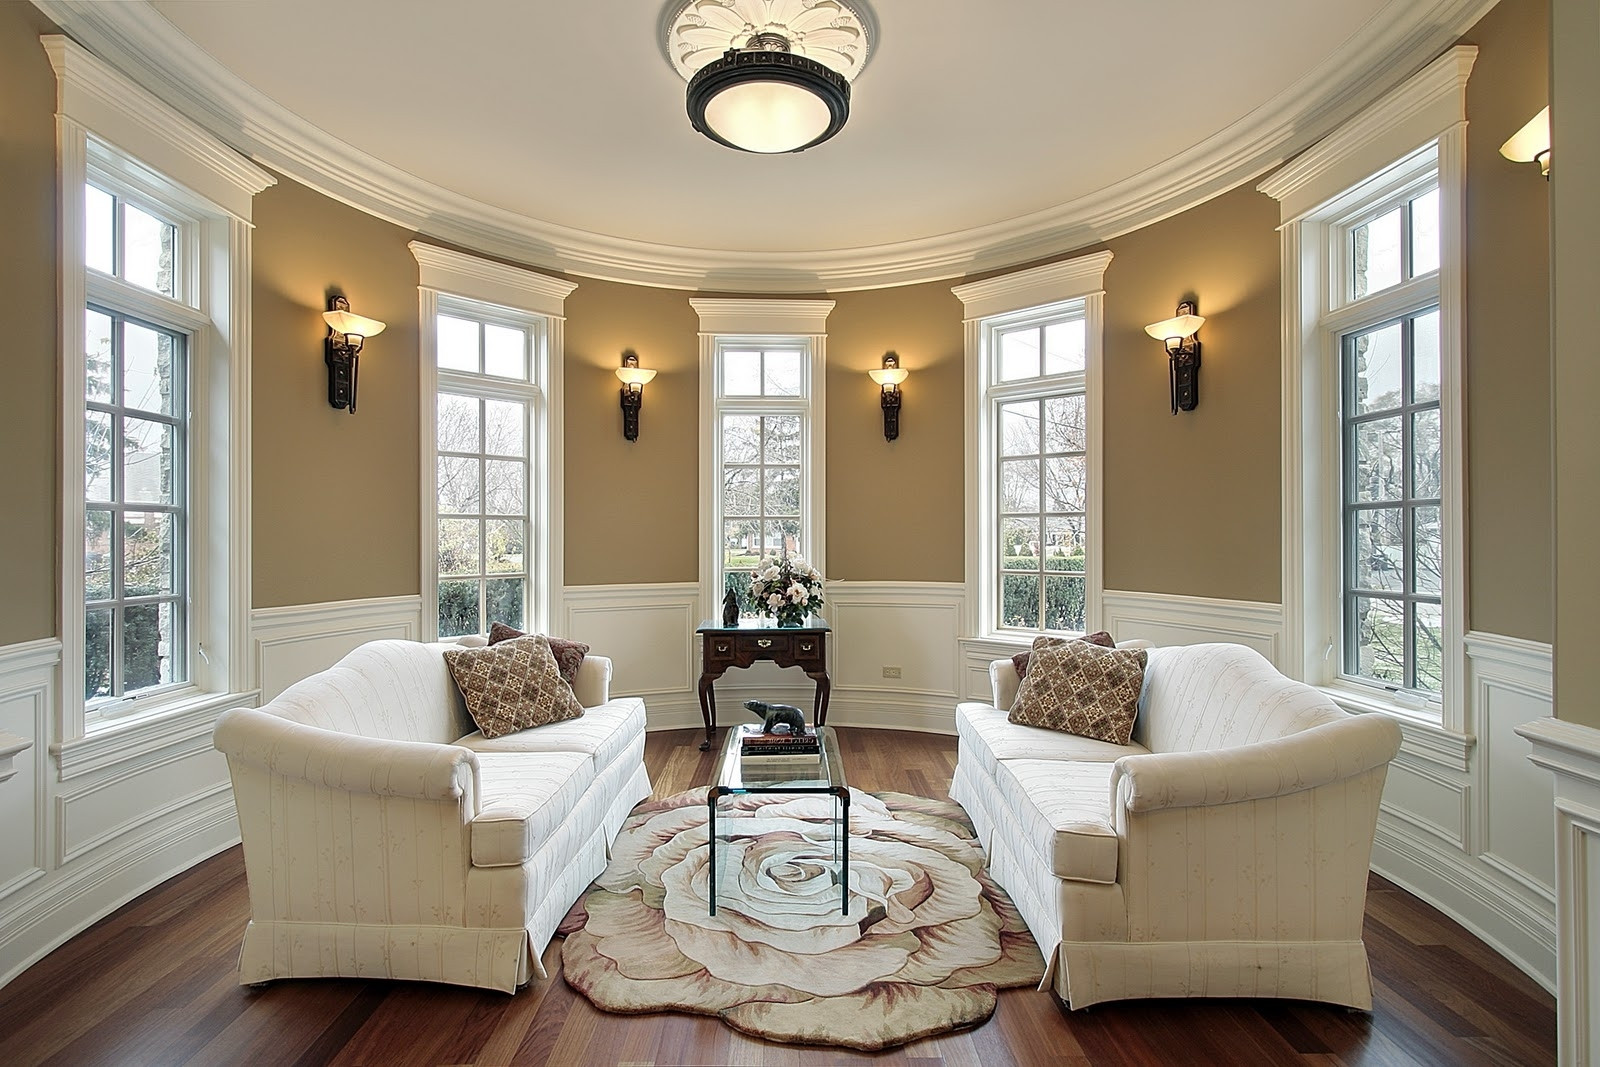 Living Room Light Fixtures Ideas
 5 Top Tips For The Best Light Fixtures